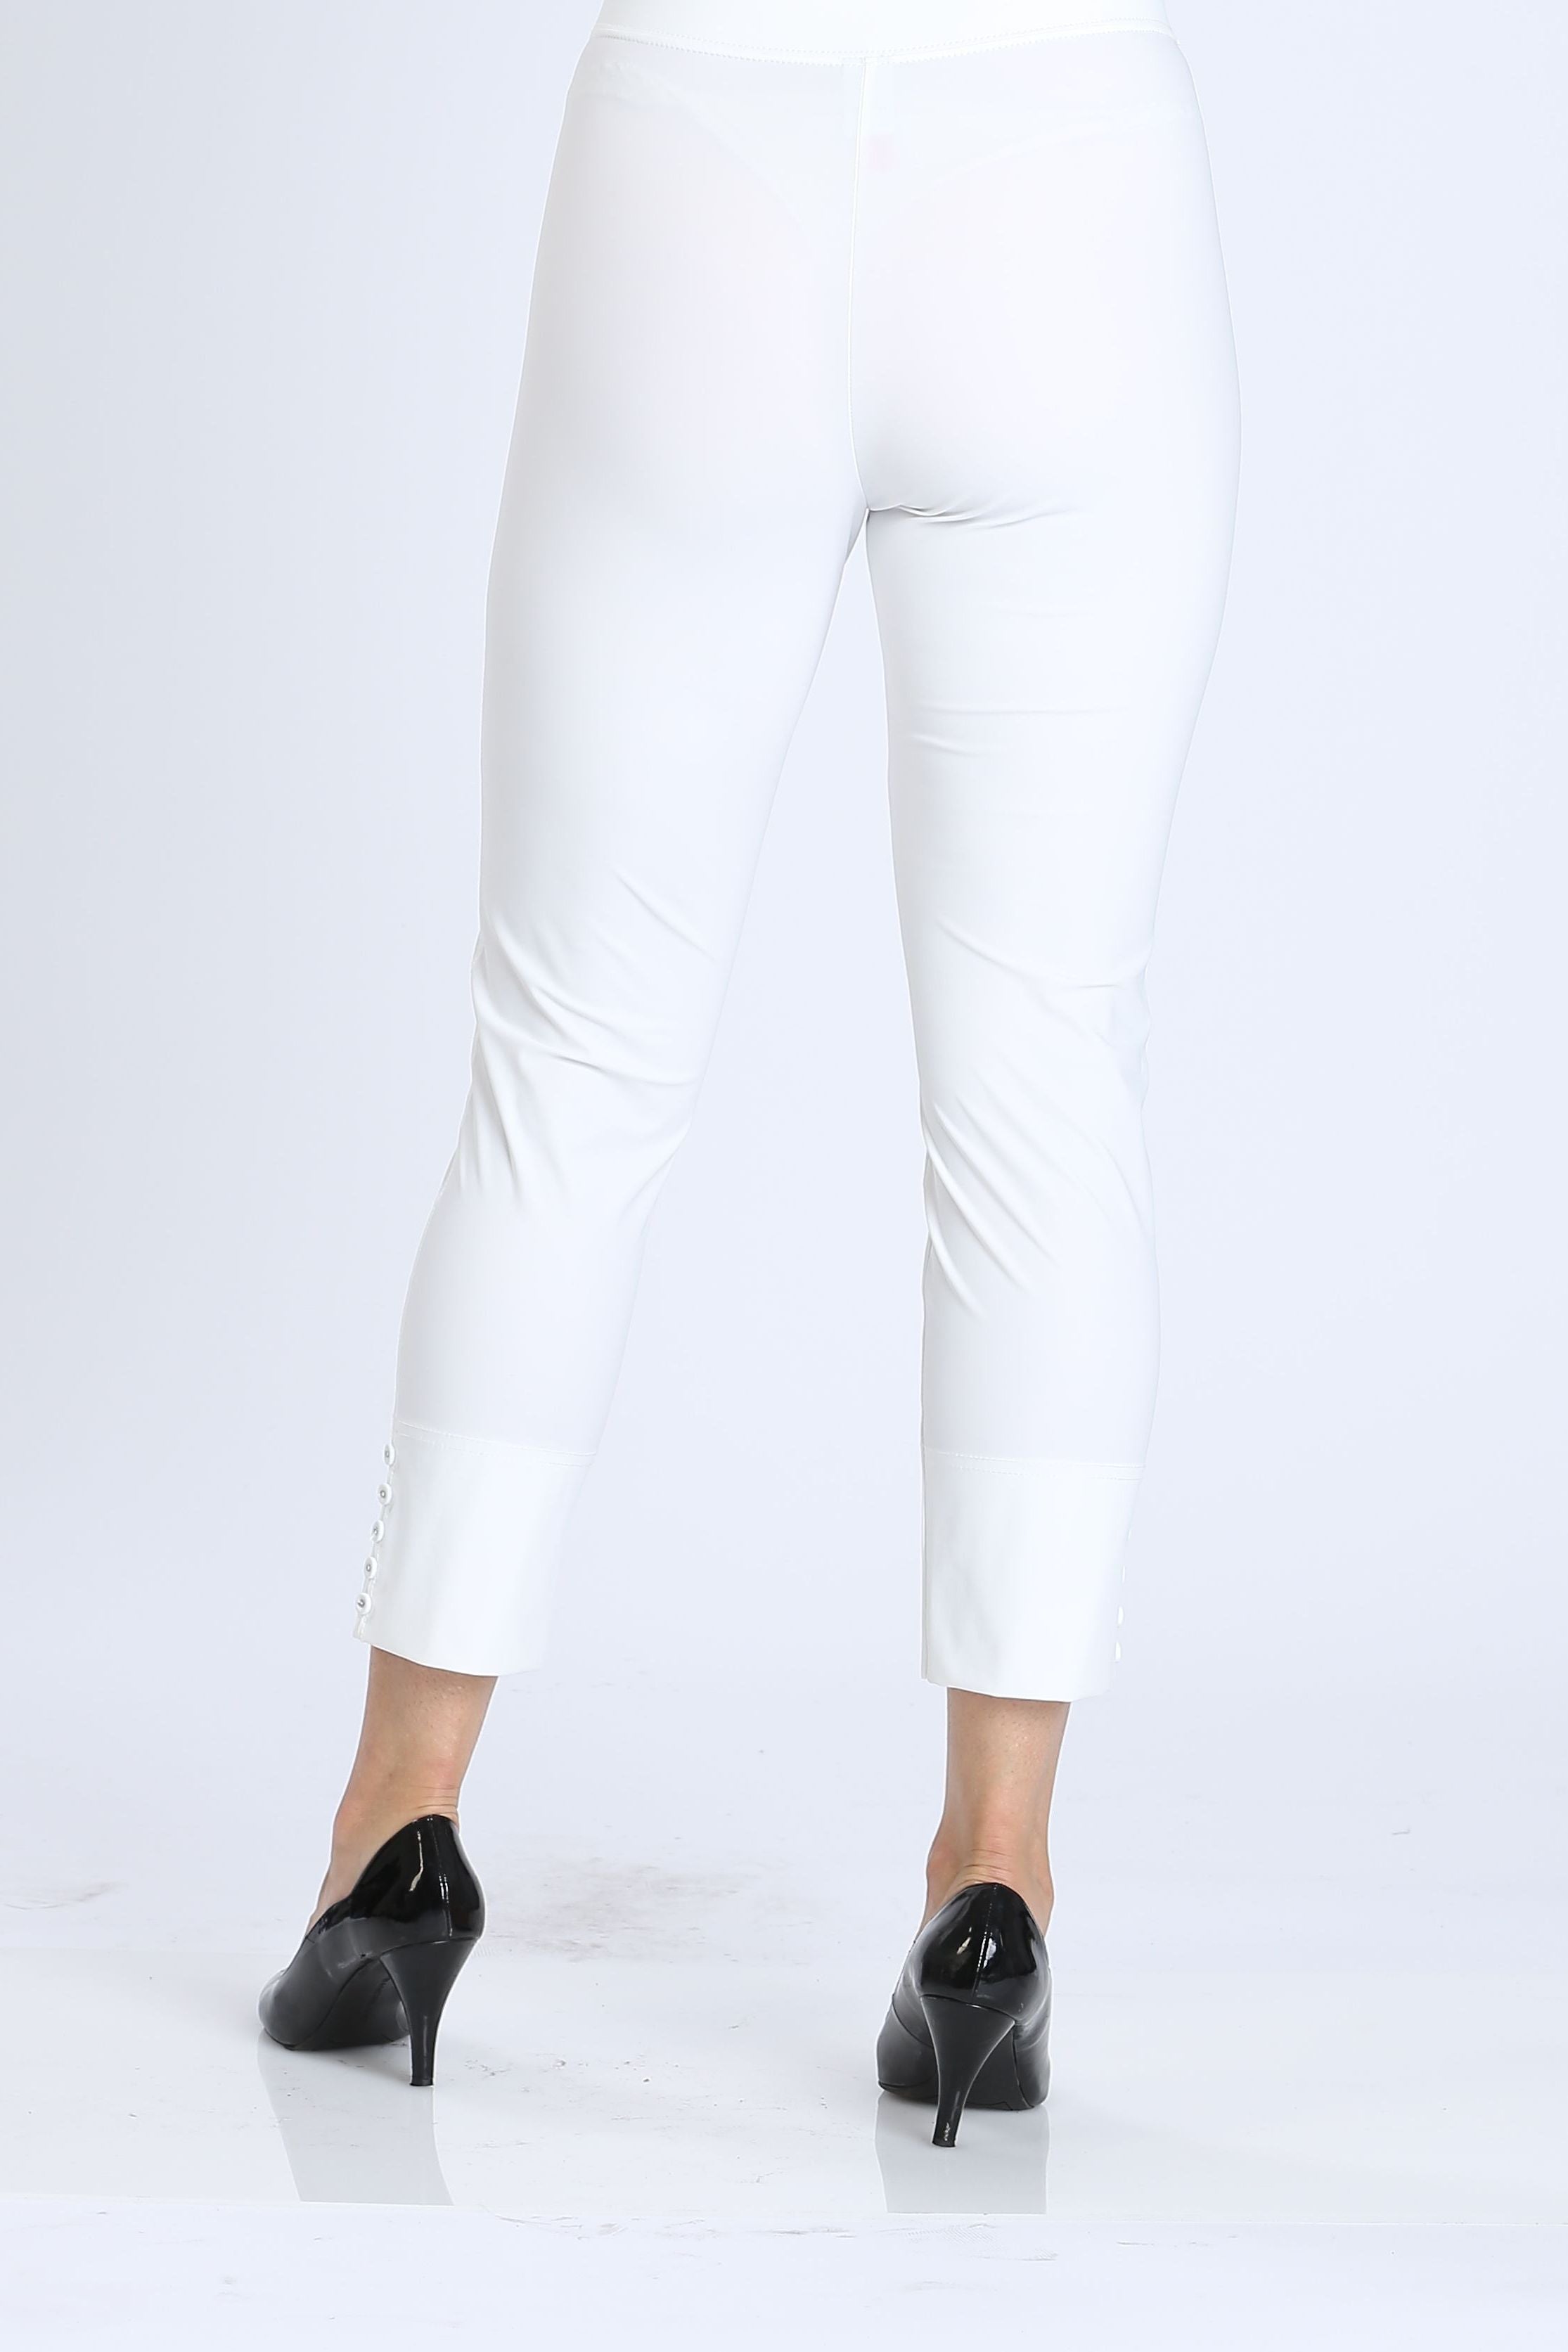 JM Collection Women White CAPRI Rhinestone Embellished Pull On Casual Pants  3X | eBay